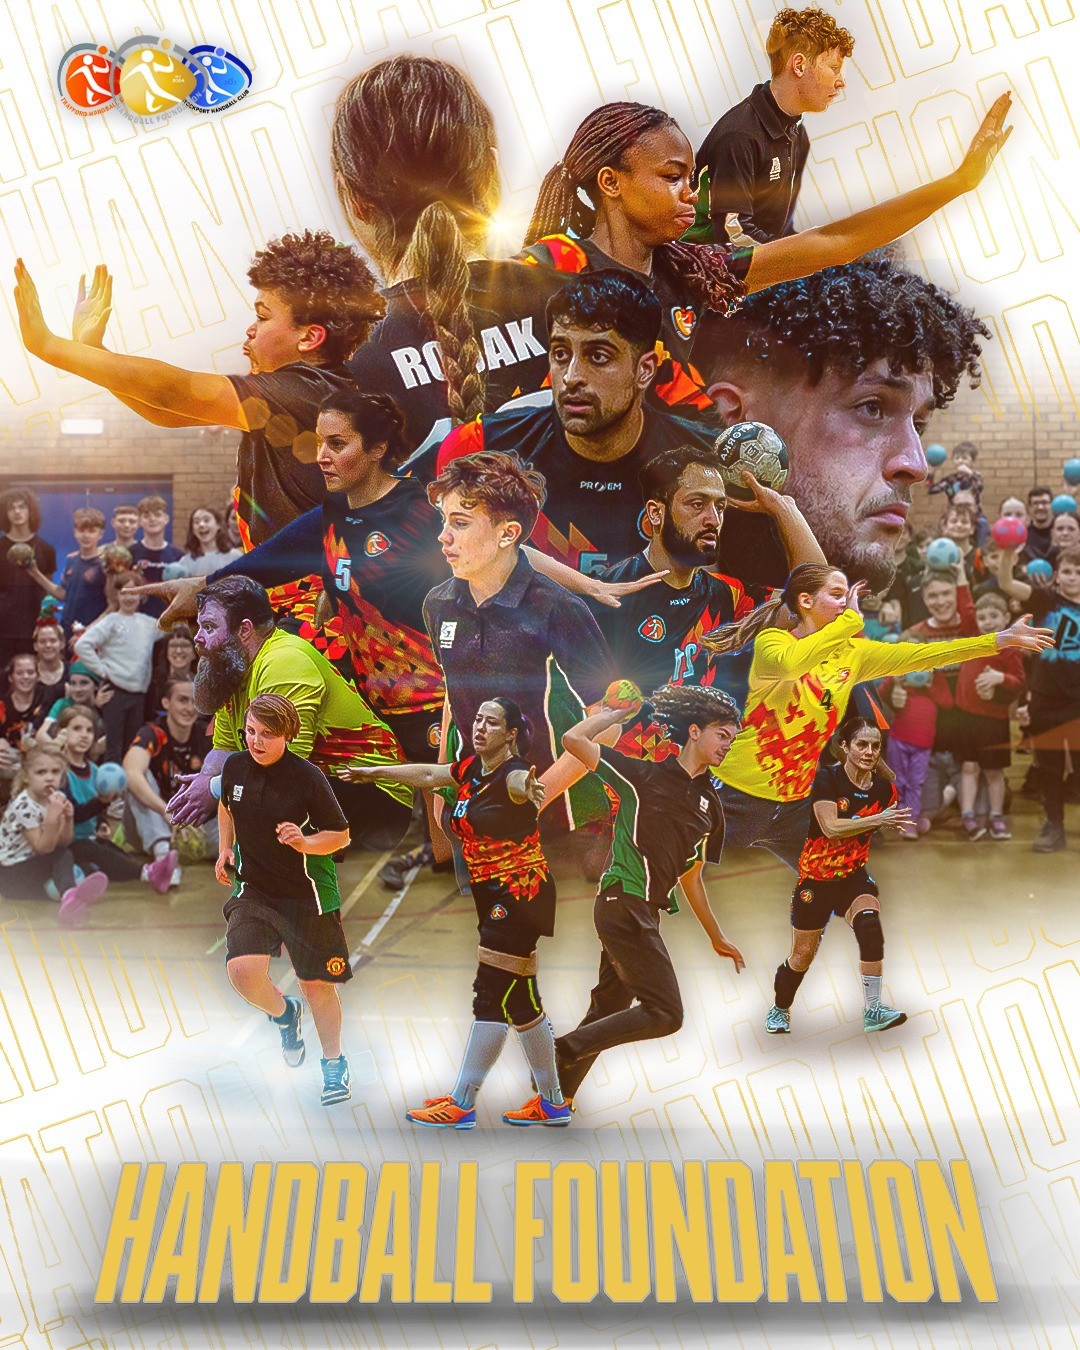 Handball Foundation launches!